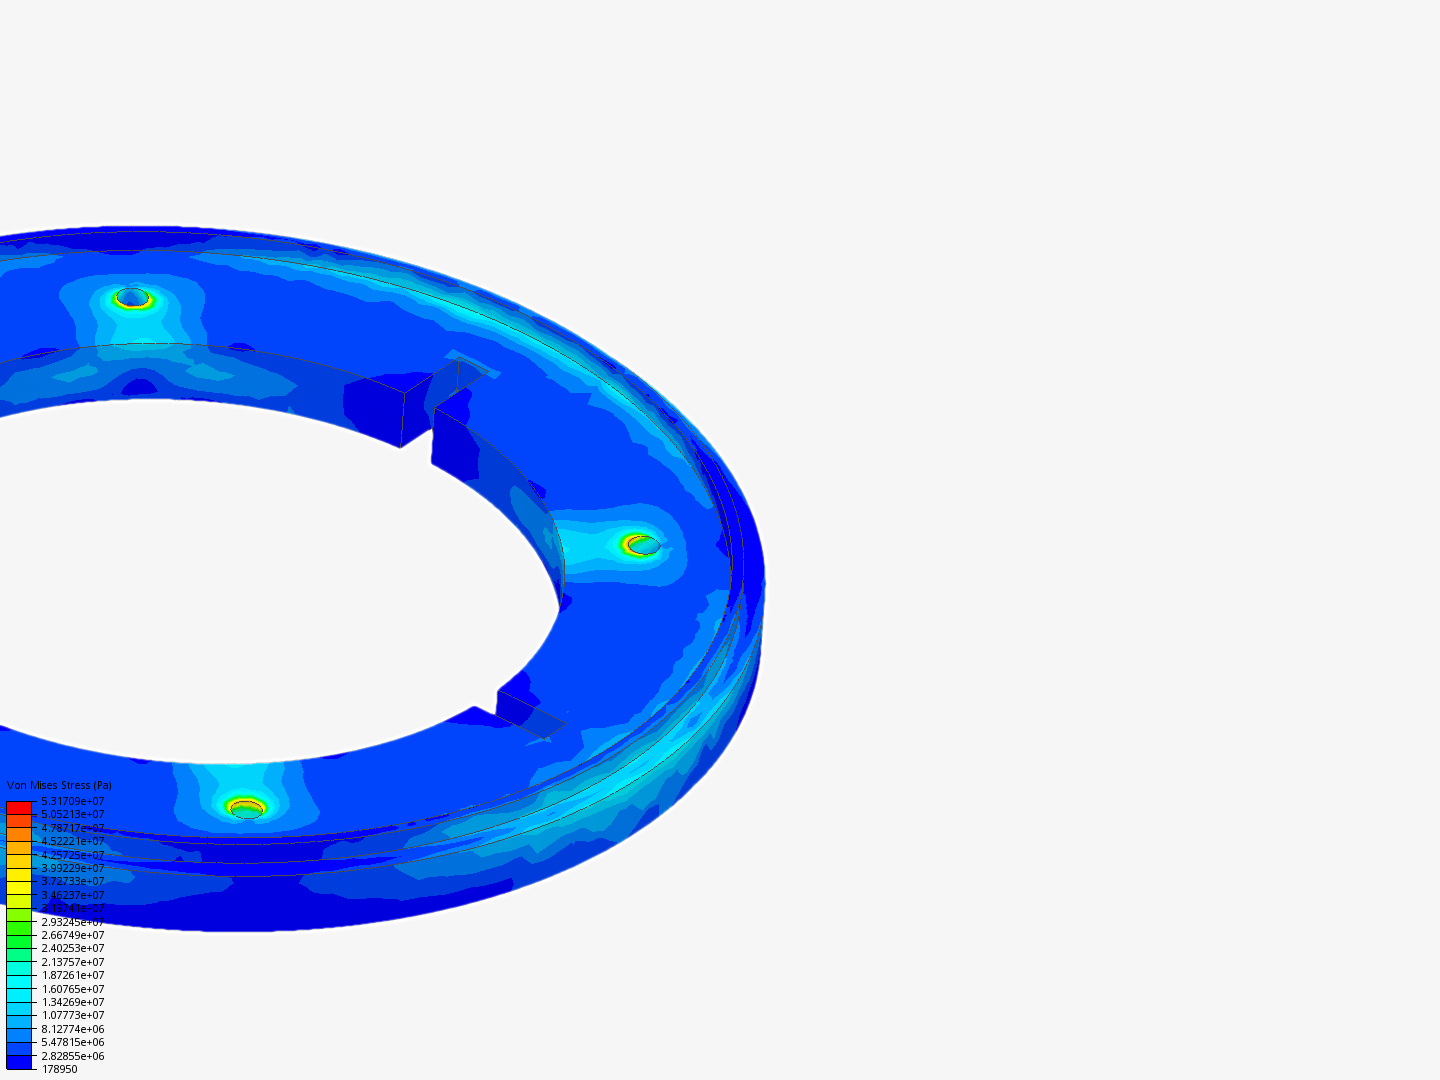 Thrust Plate Simulation image